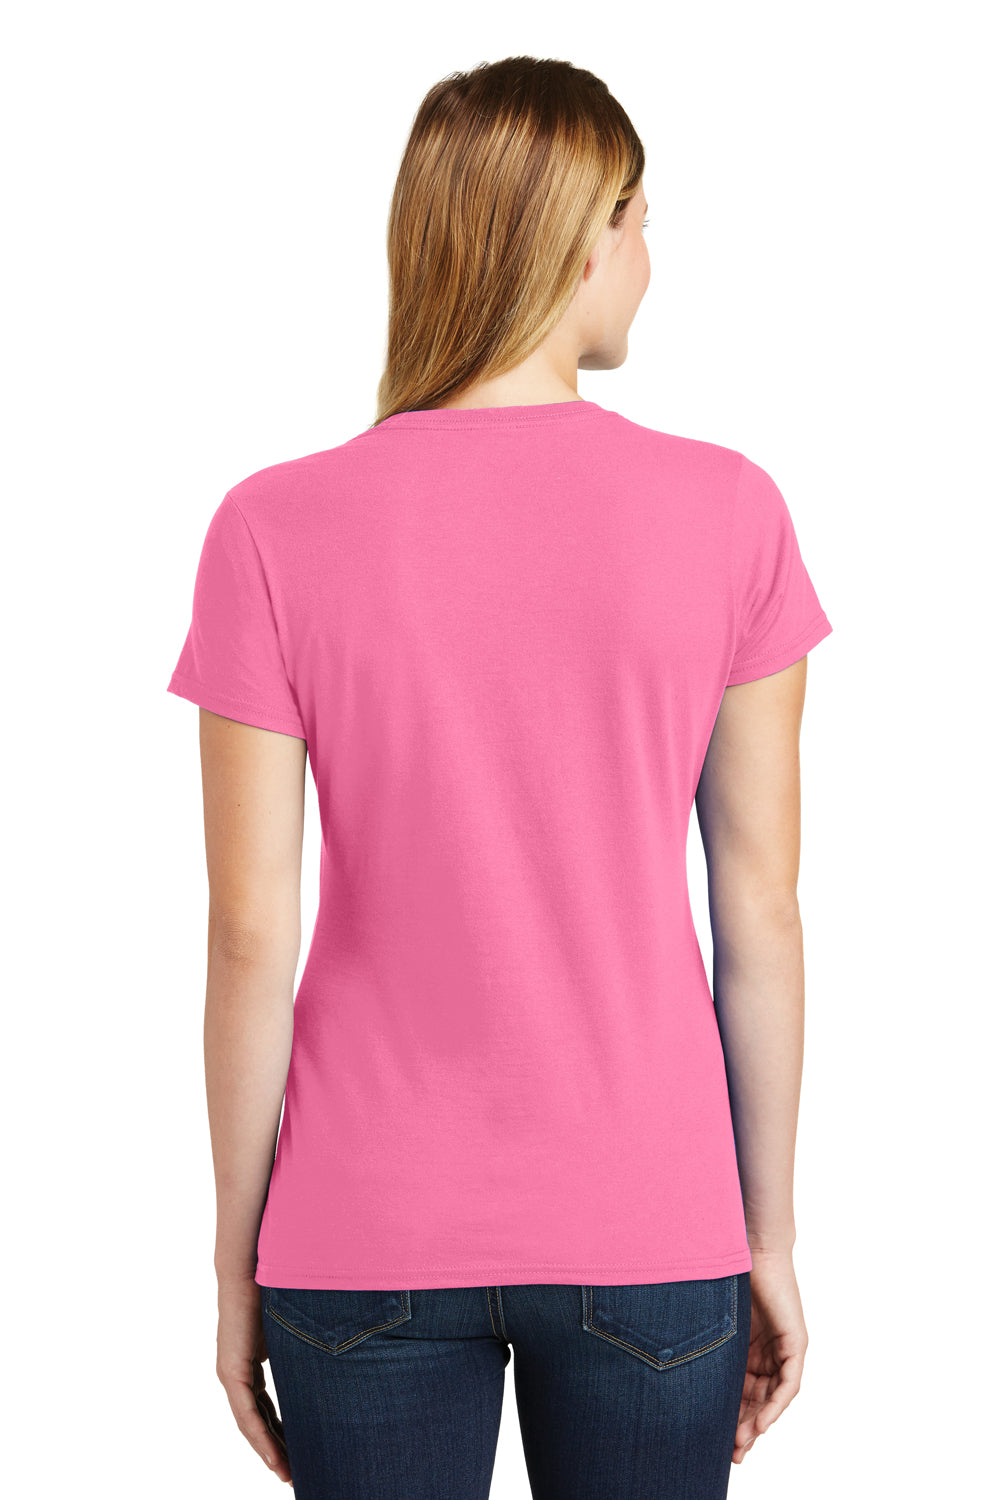 Port & Company LPC450 Womens Fan Favorite Short Sleeve Crewneck T-Shirt Pink Back